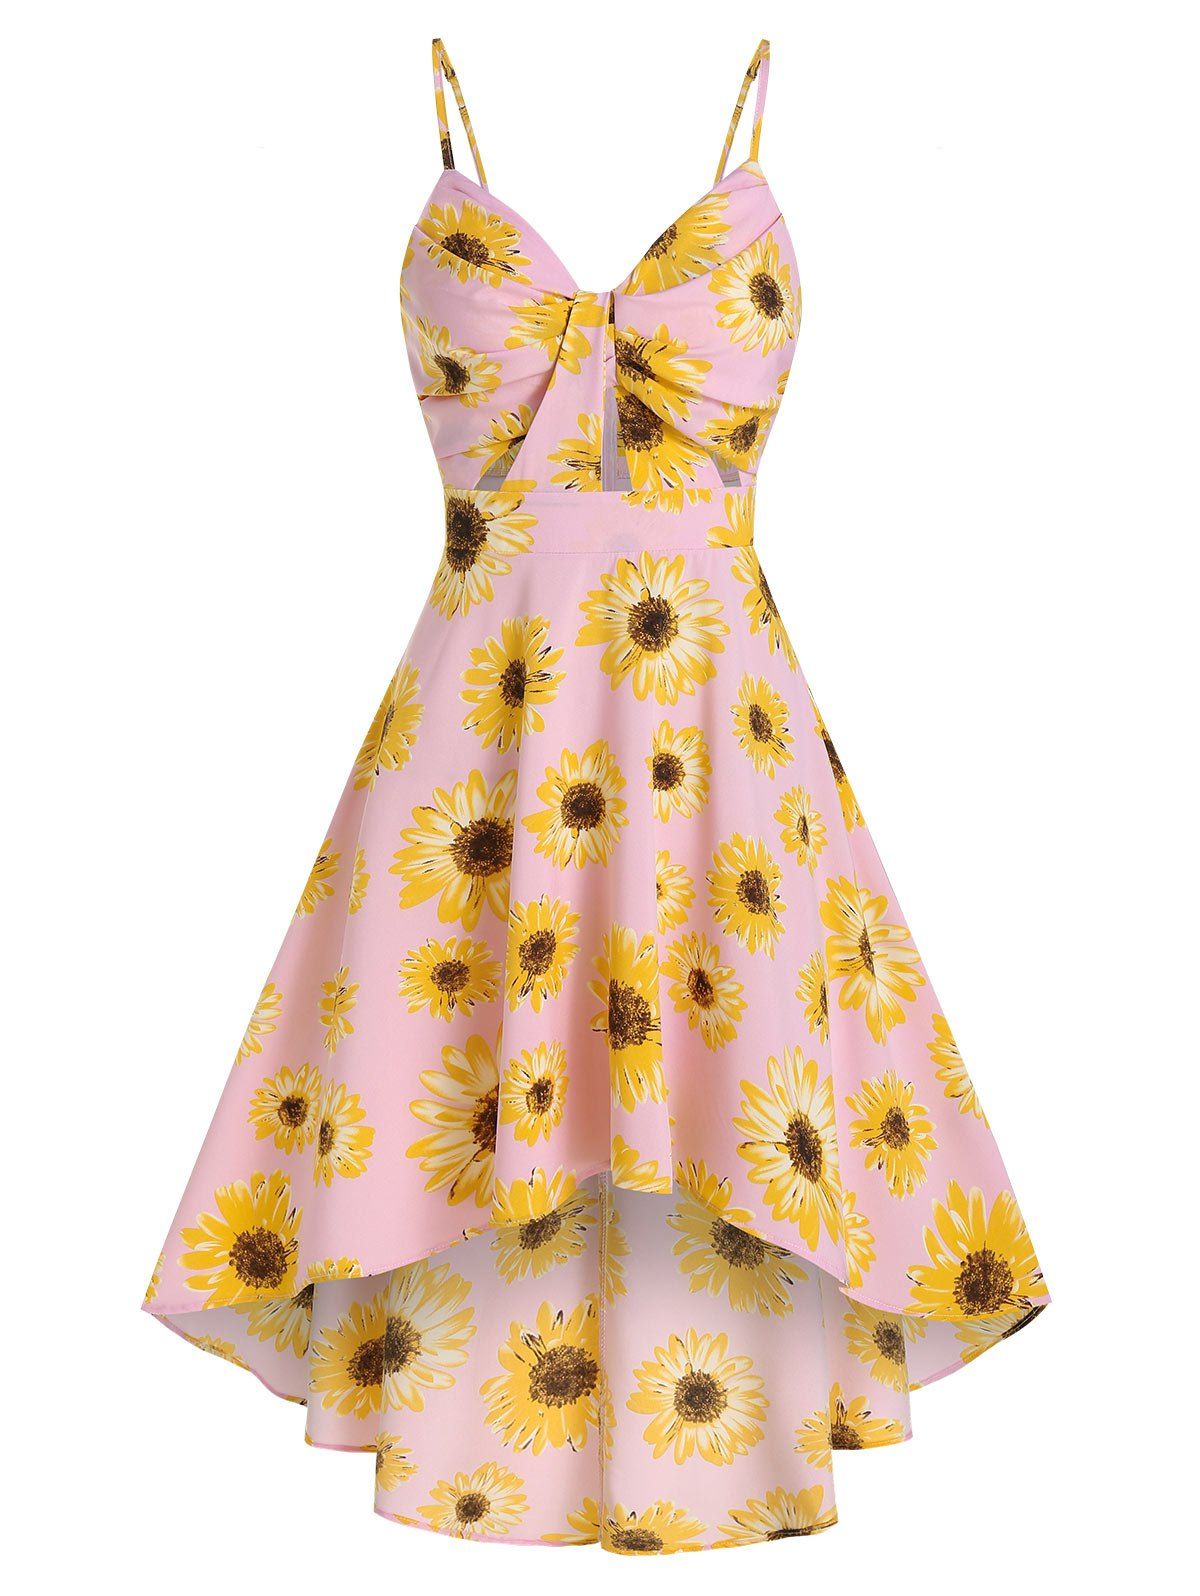 Vacation Sunflower Print Sundress Spaghetti Strap Summer High Low A Line Dress - LIGHT PINK S